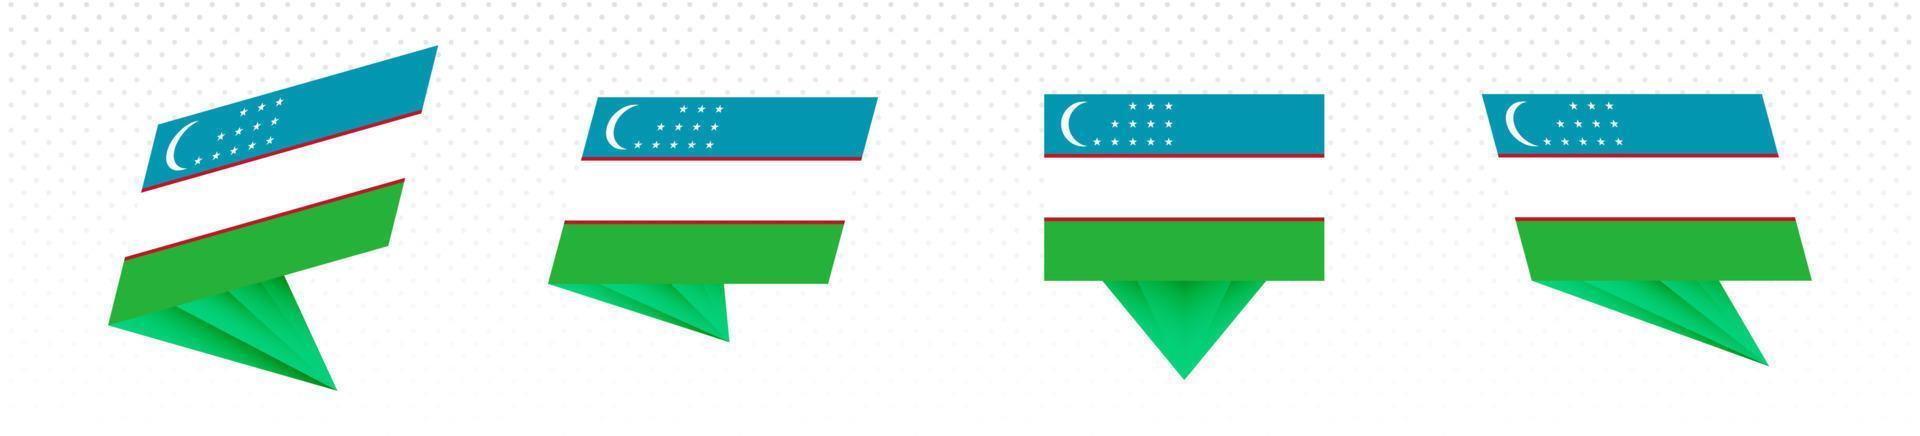 bandera de uzbekistán en diseño abstracto moderno, juego de banderas. vector